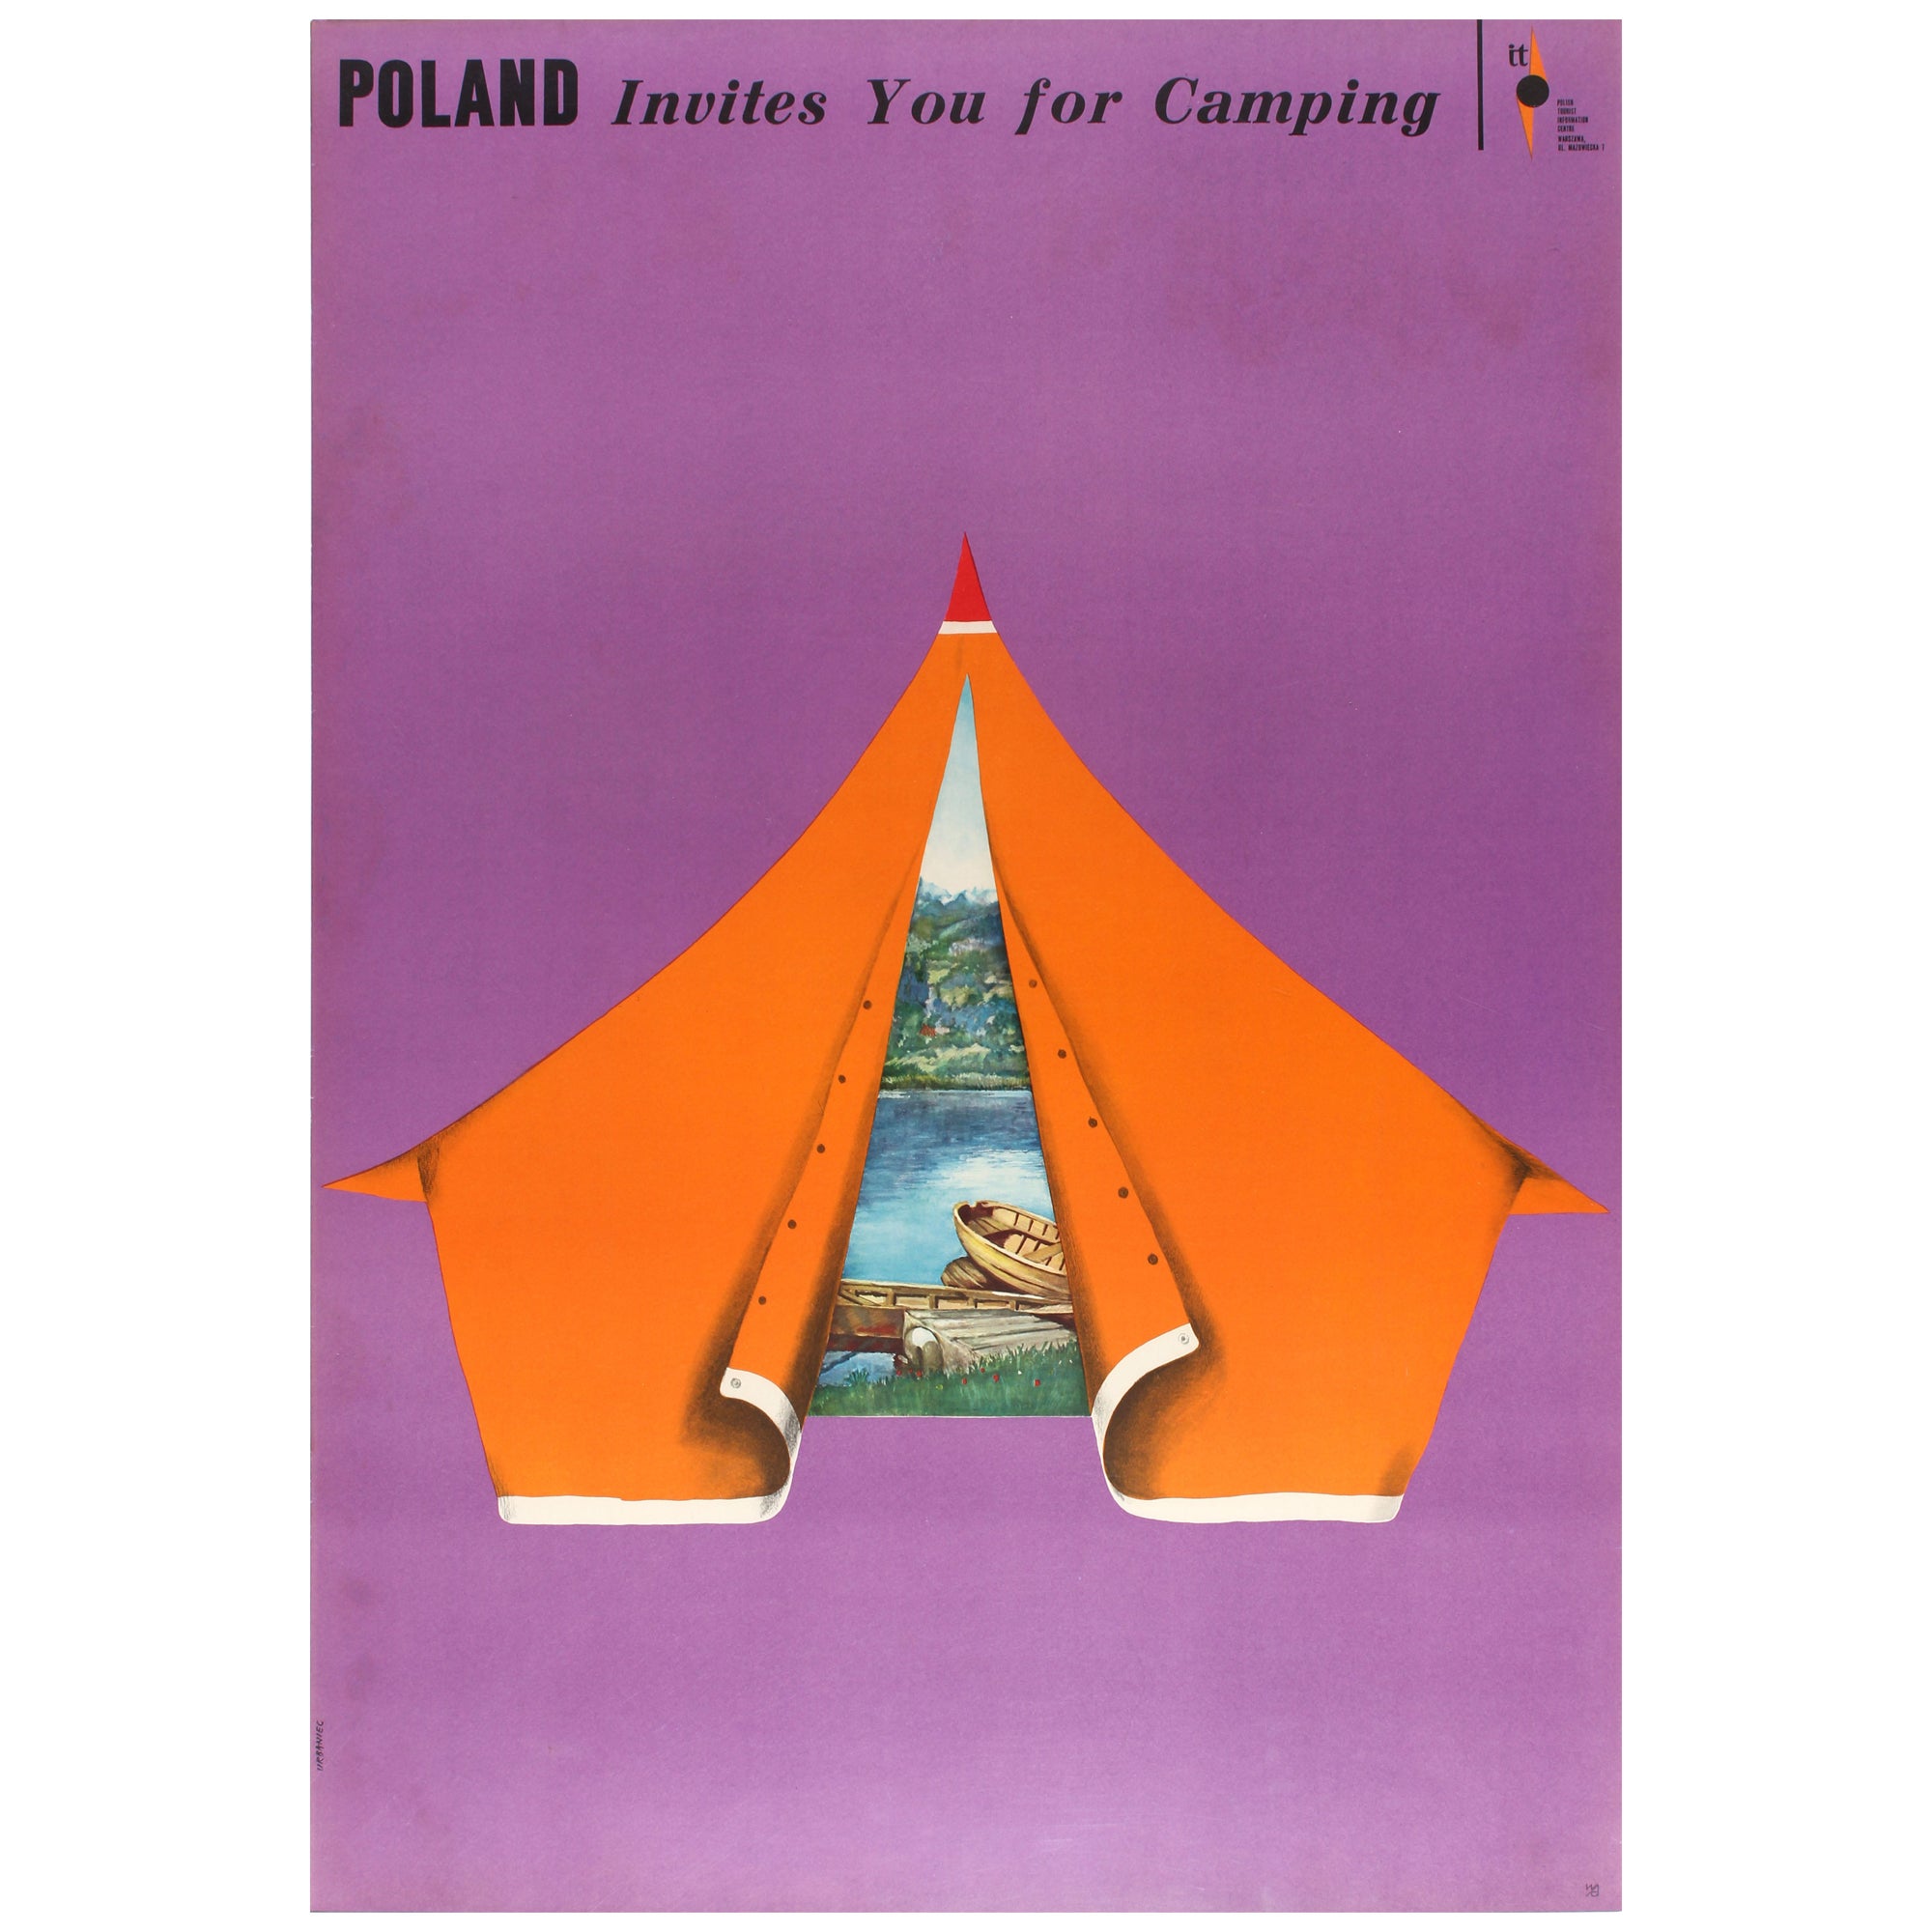 Original Vintage Travel Poster Poland Invites You Camping Tent Maciej Urbaniec For Sale